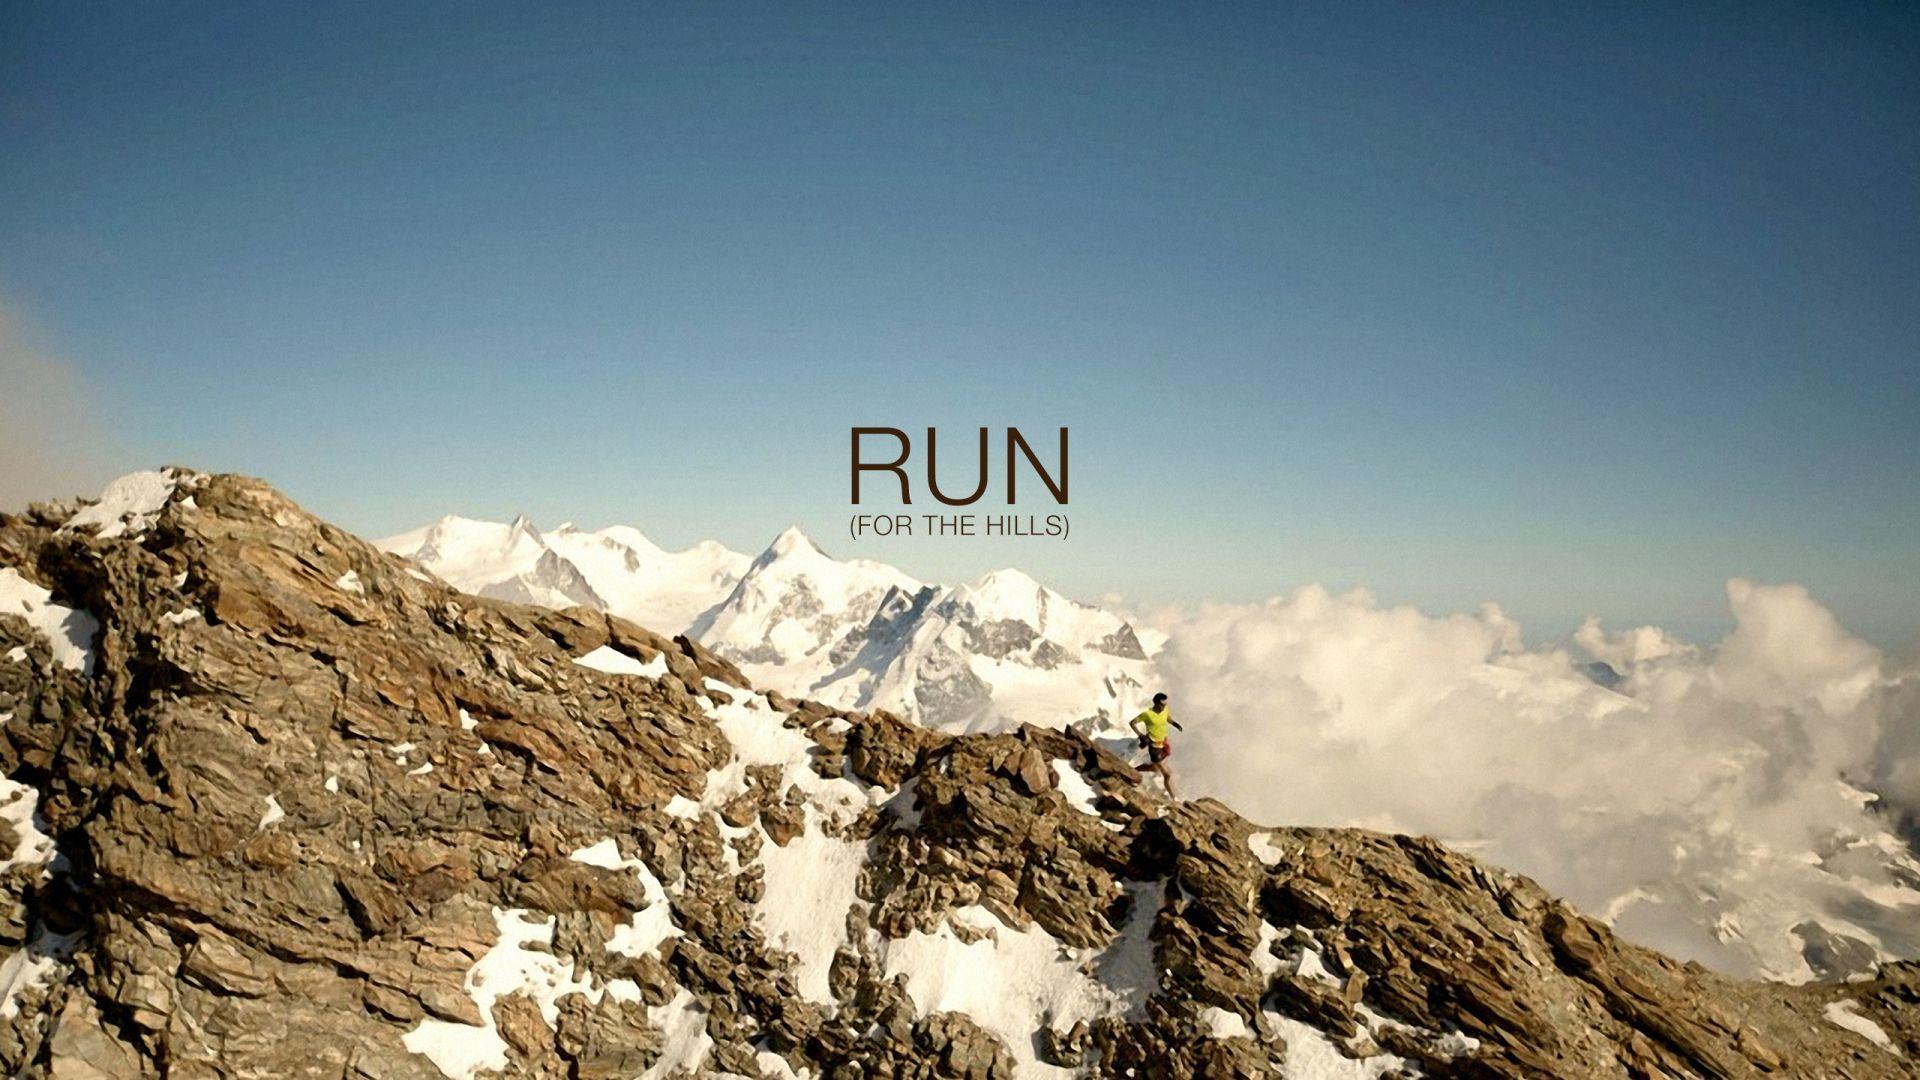 Run For The Hills Wallpaper. HD Motivation Wallpaper for Mobile